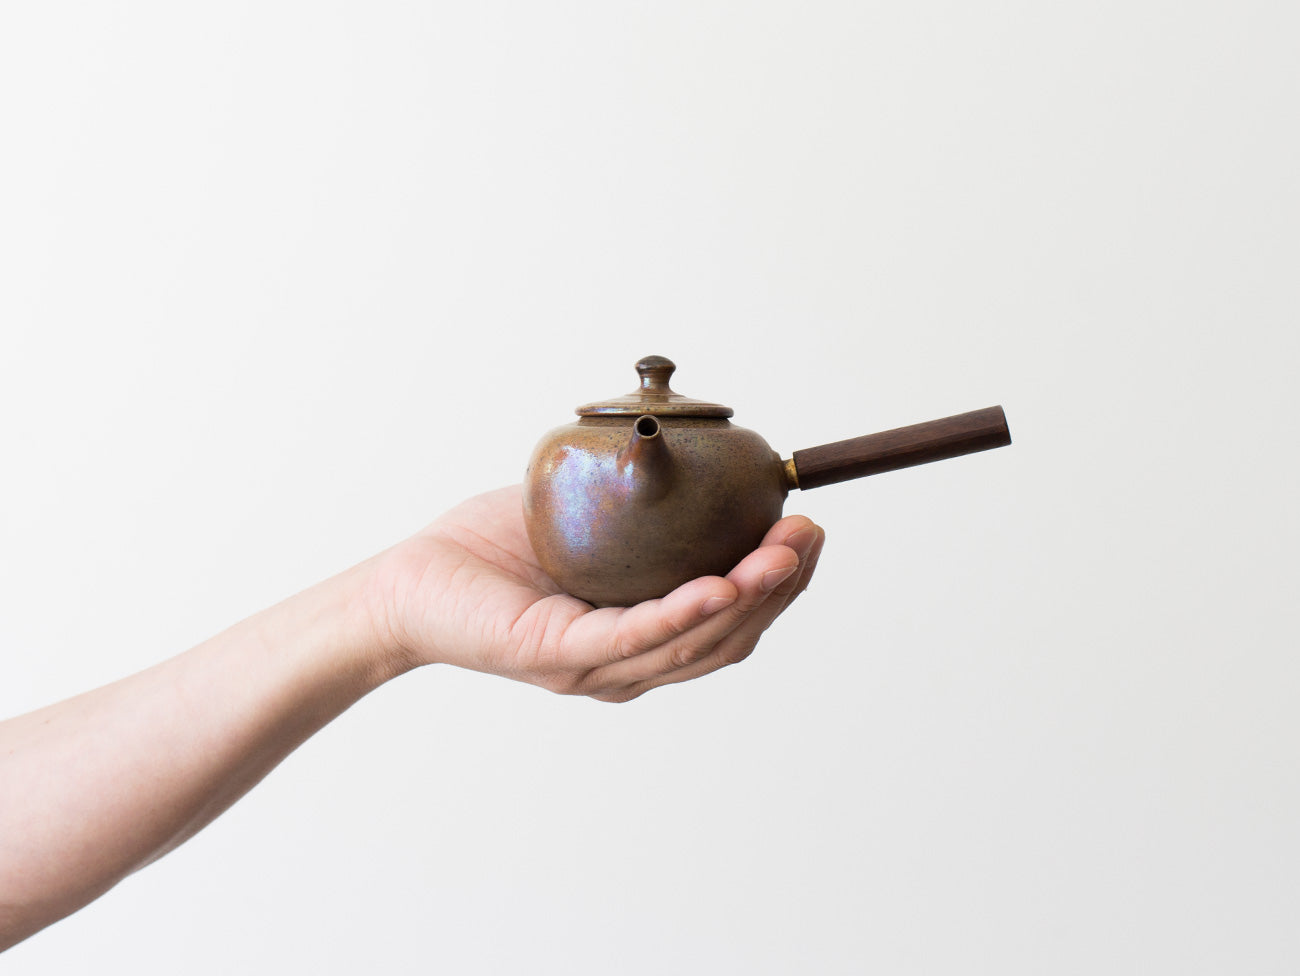 Fire Walnut Teapot, No. 2